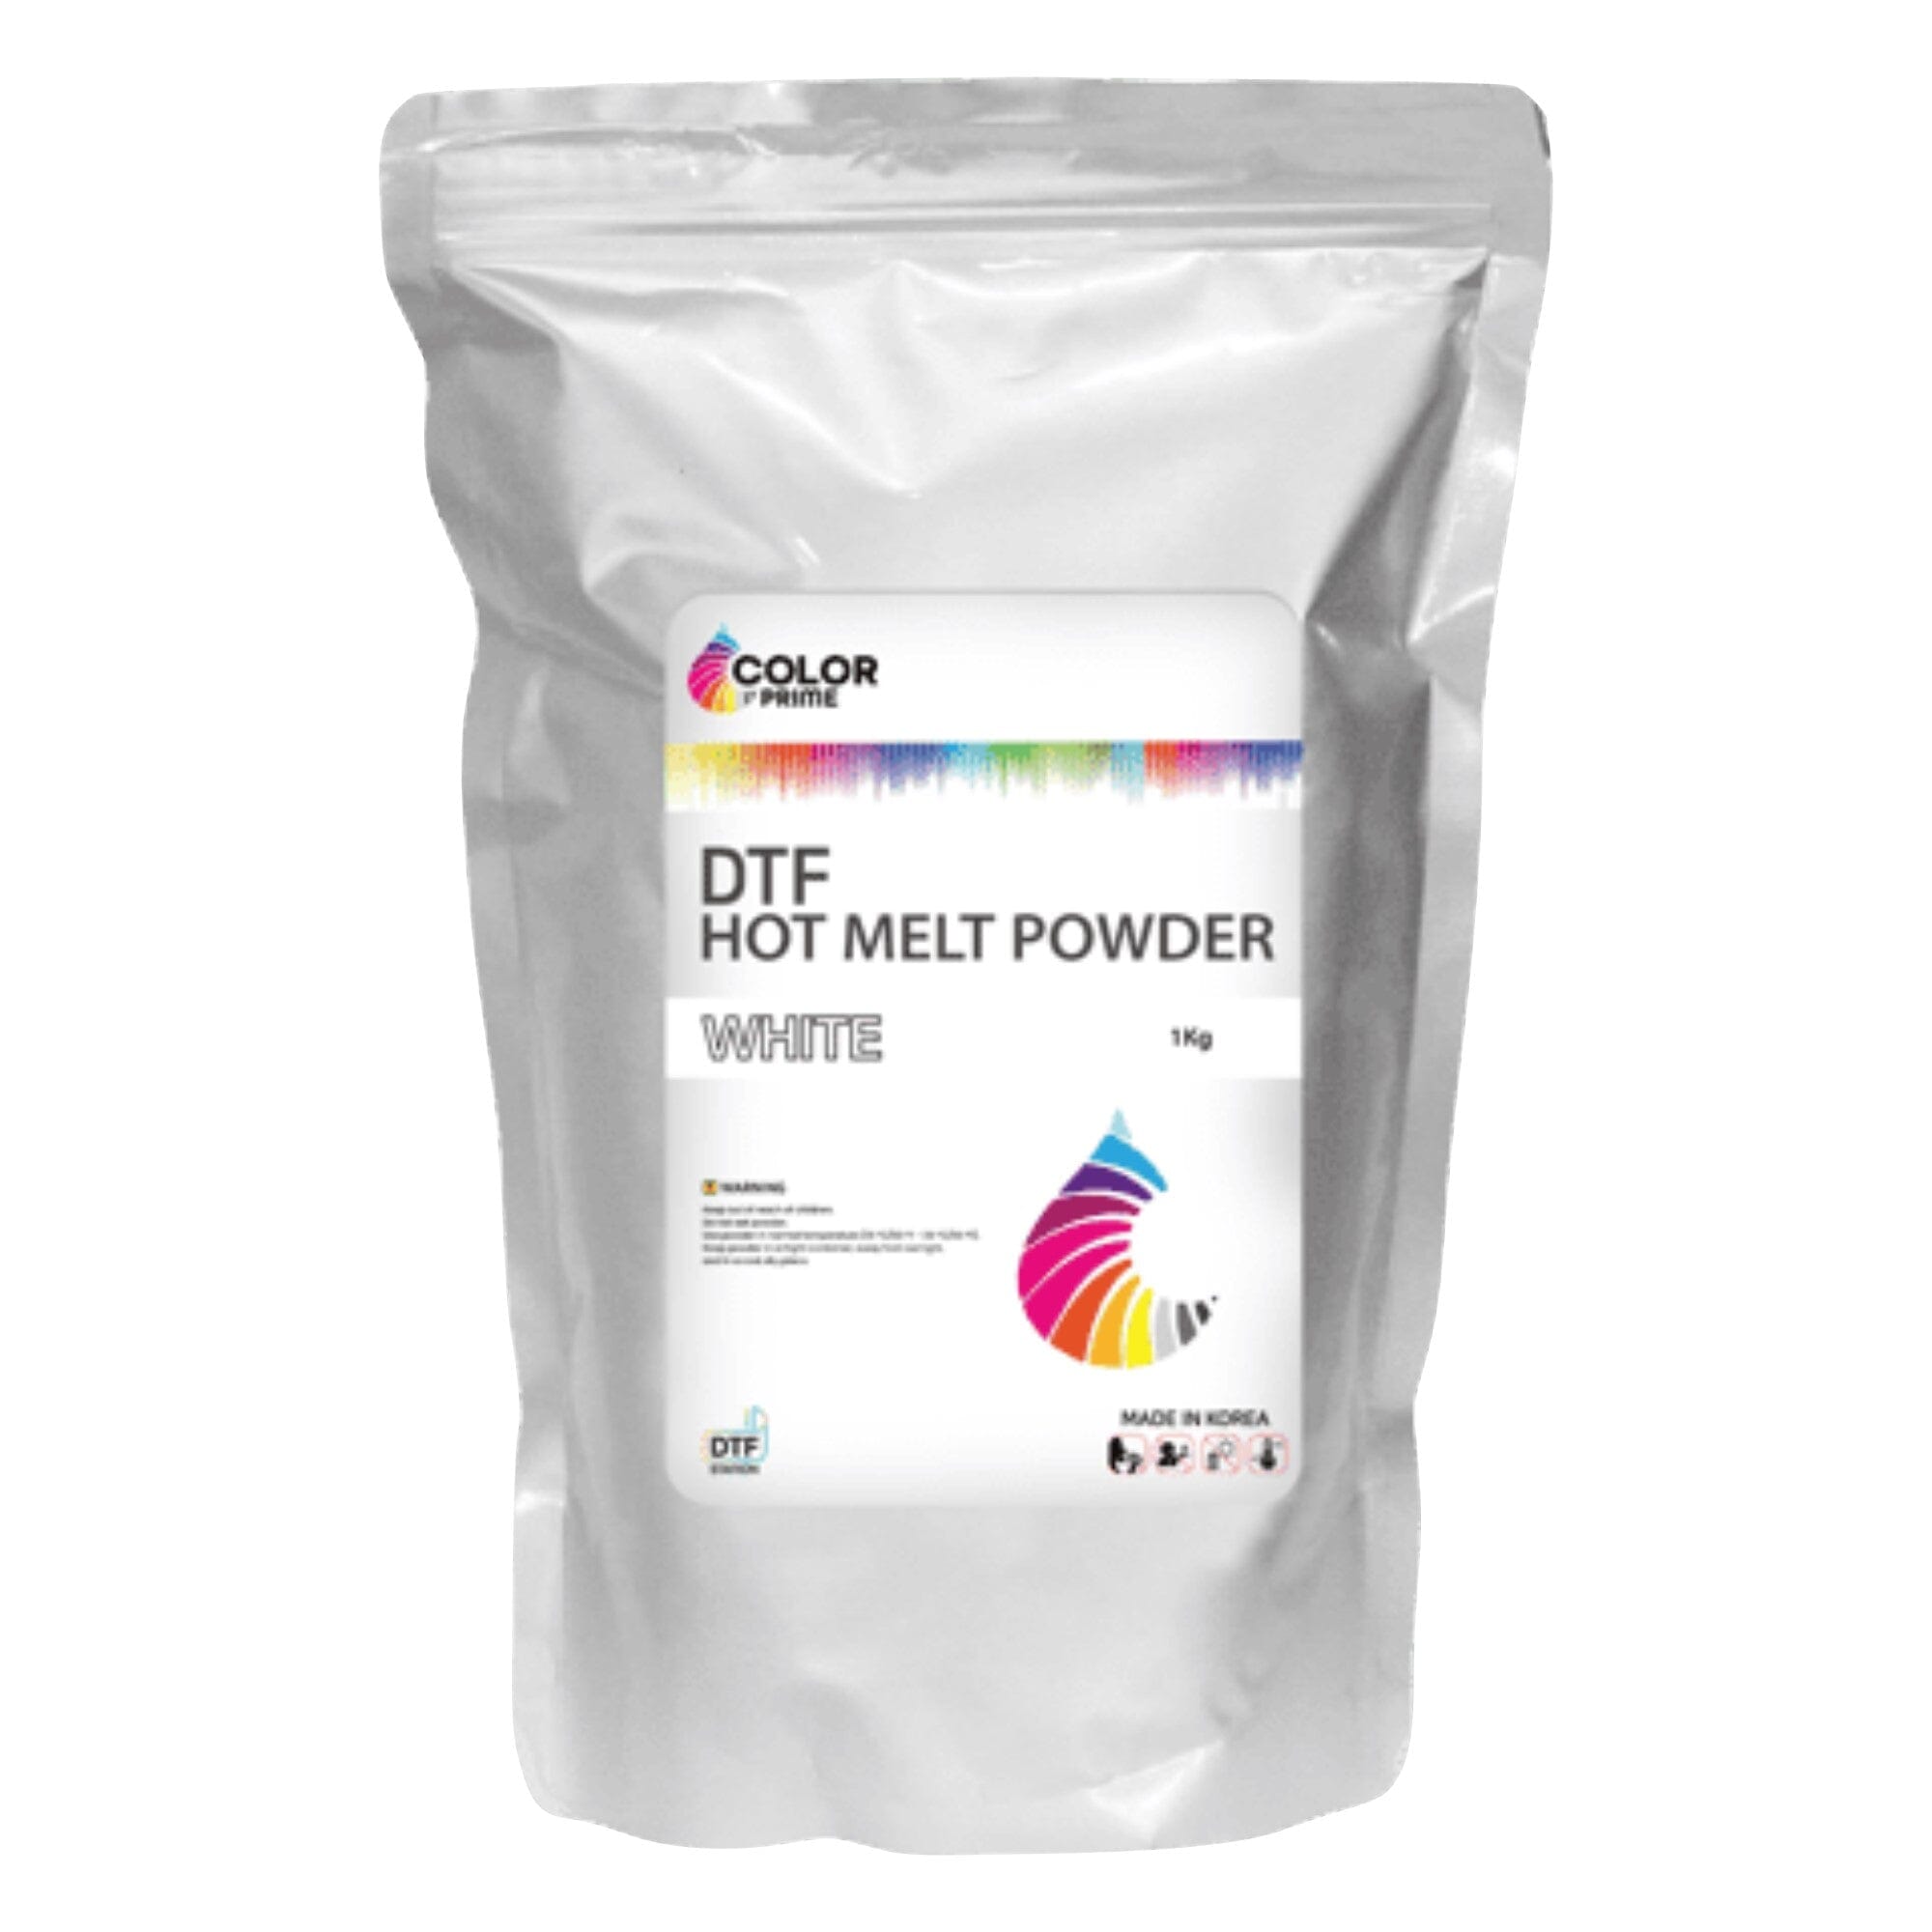 Prestige Direct to Film (DTF) Hot Melt Powder White - 1 kg